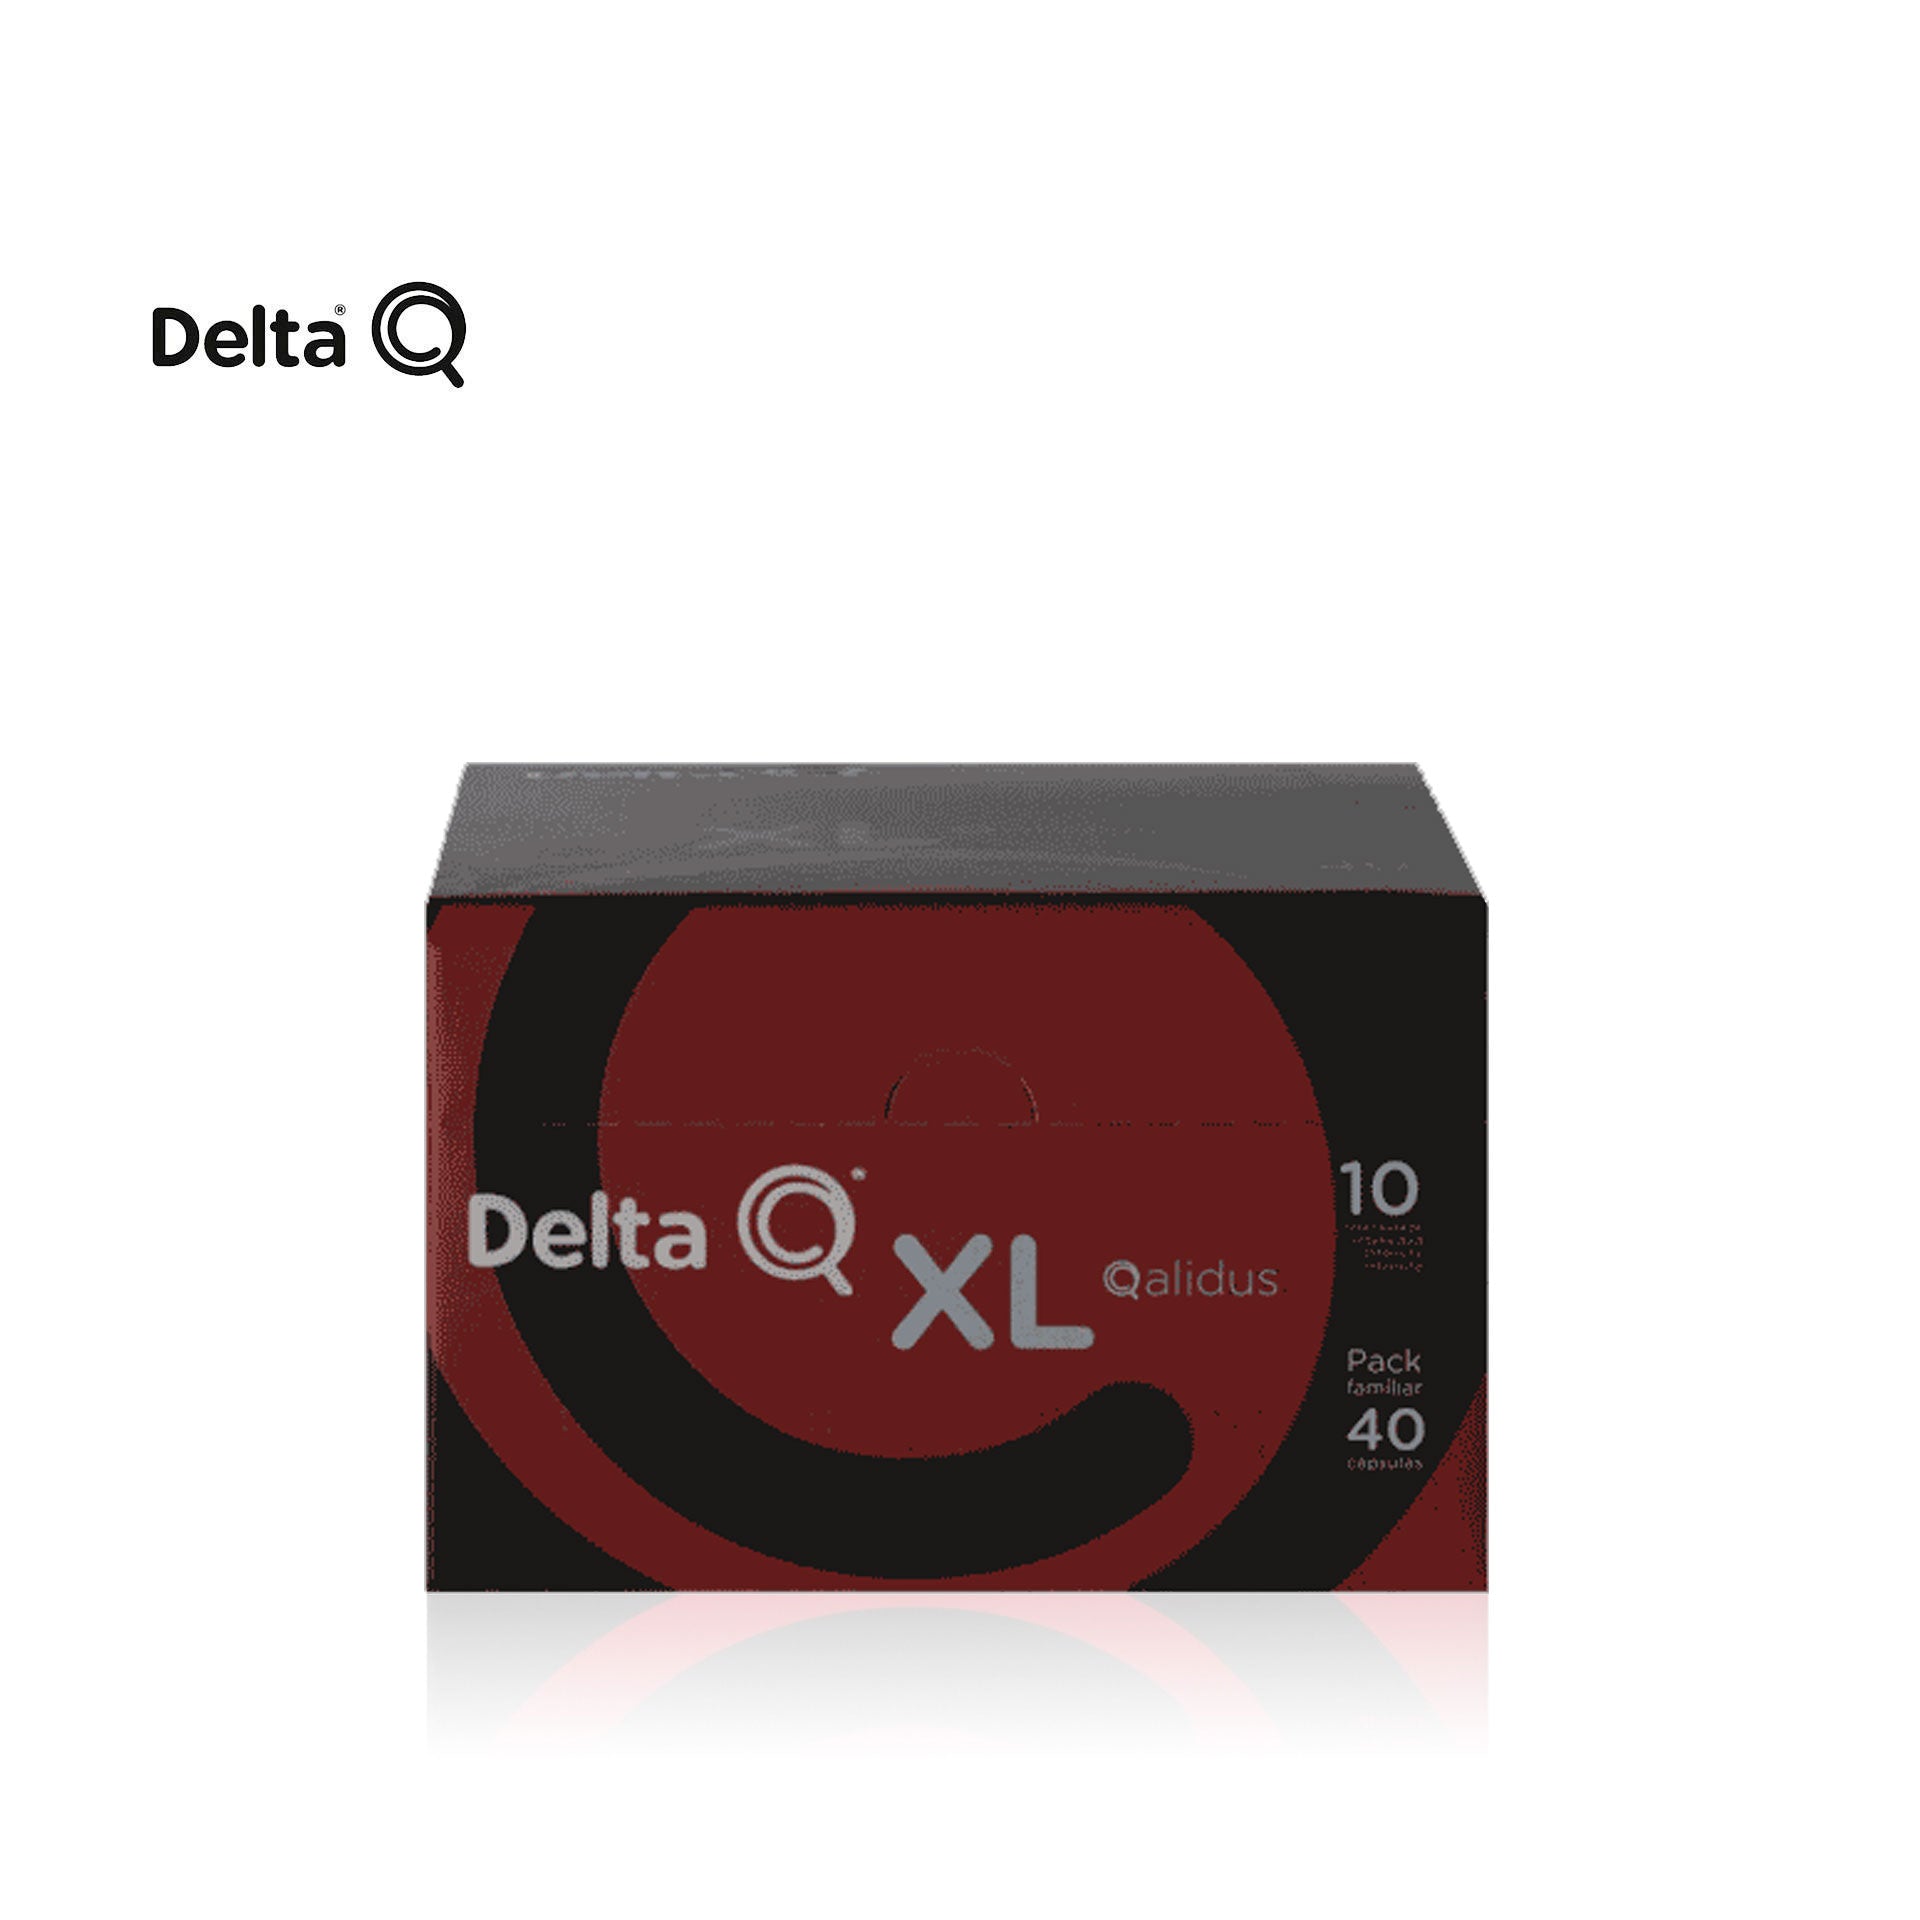 Delta Q Café Cápsulas Qalidus Intensidade 10 Pack XL - 40 un